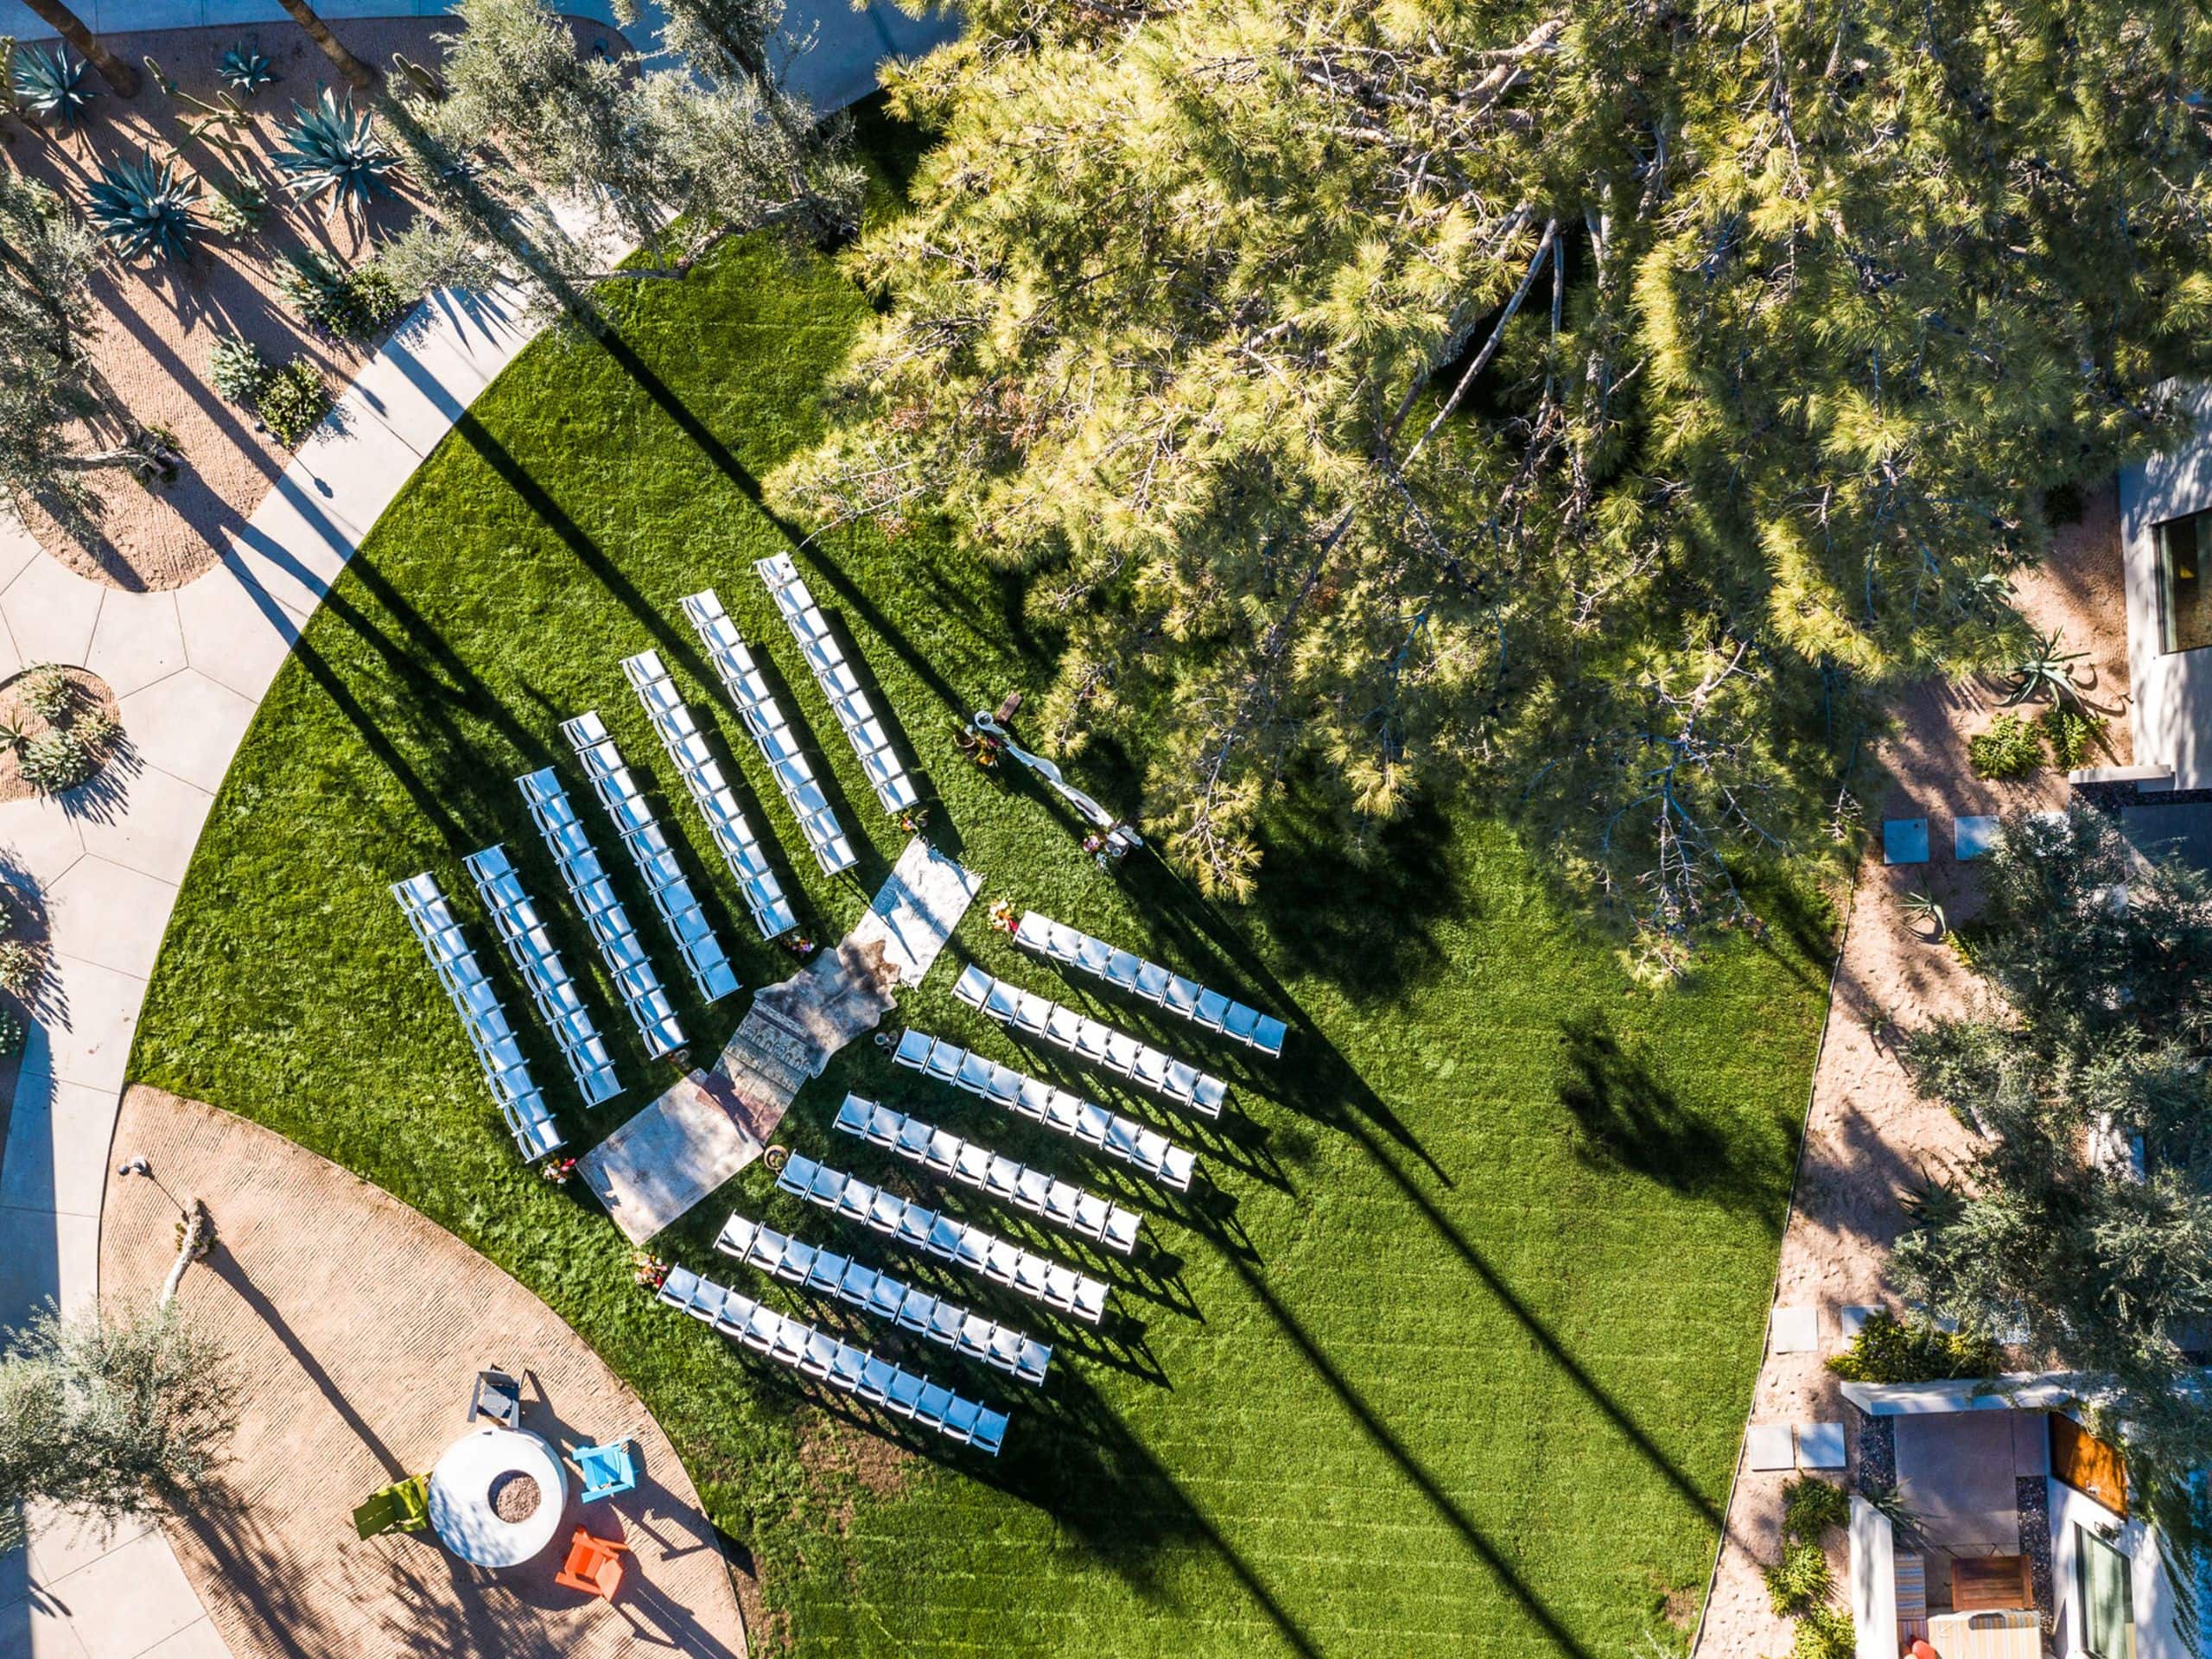 Andaz Scottsdale Resort & Bungalows Aerial Sonoran Lawn